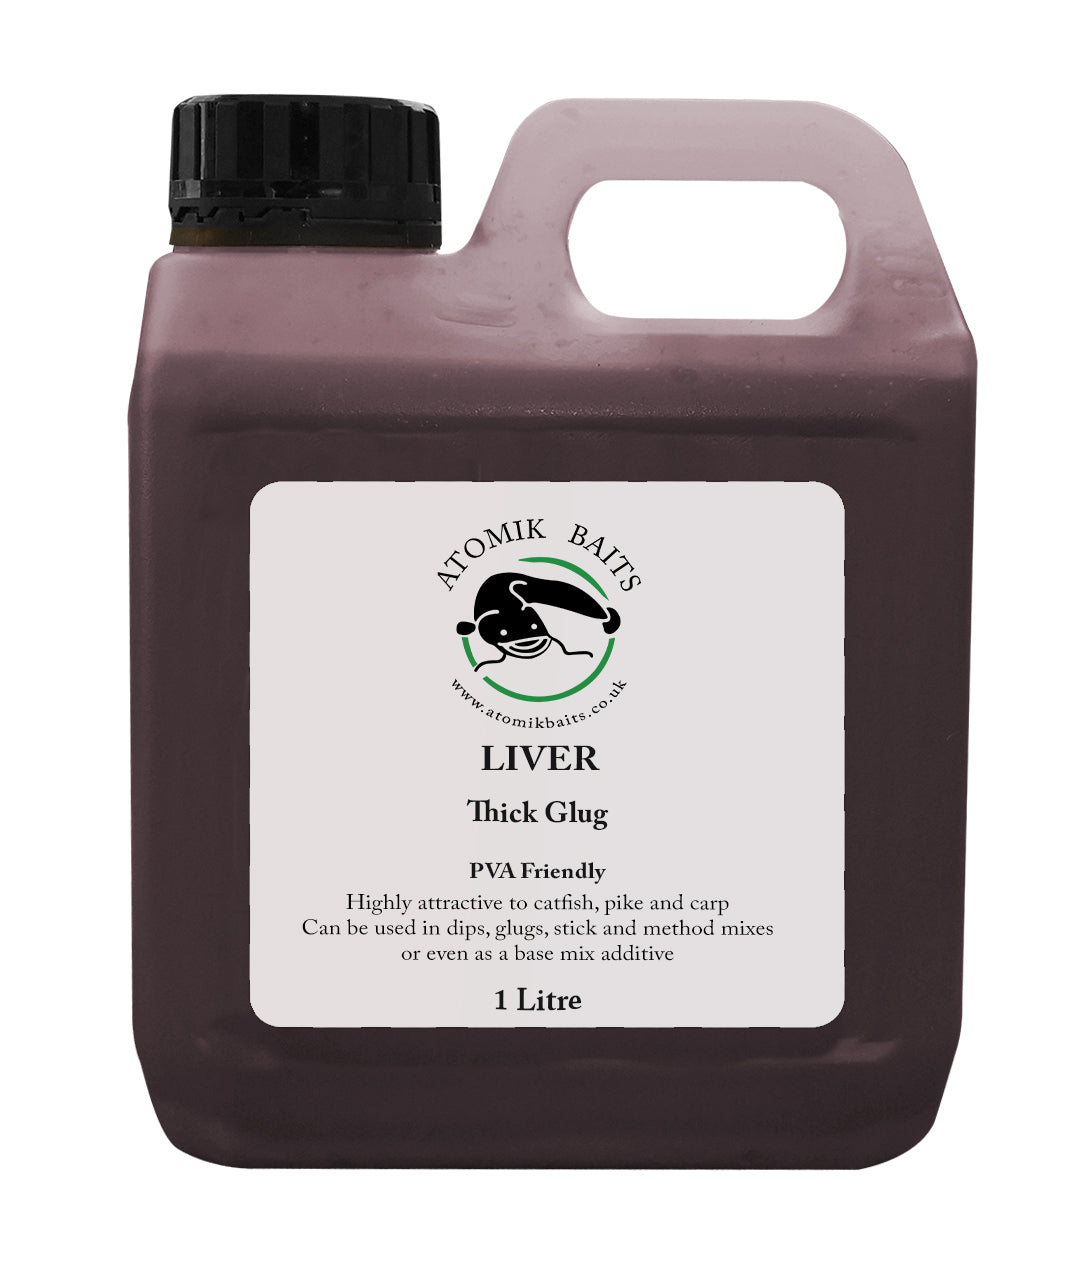 Liver Flavour - Glug, Particle Feed, Liquid Additive, Dip -1 Litre 1000ml